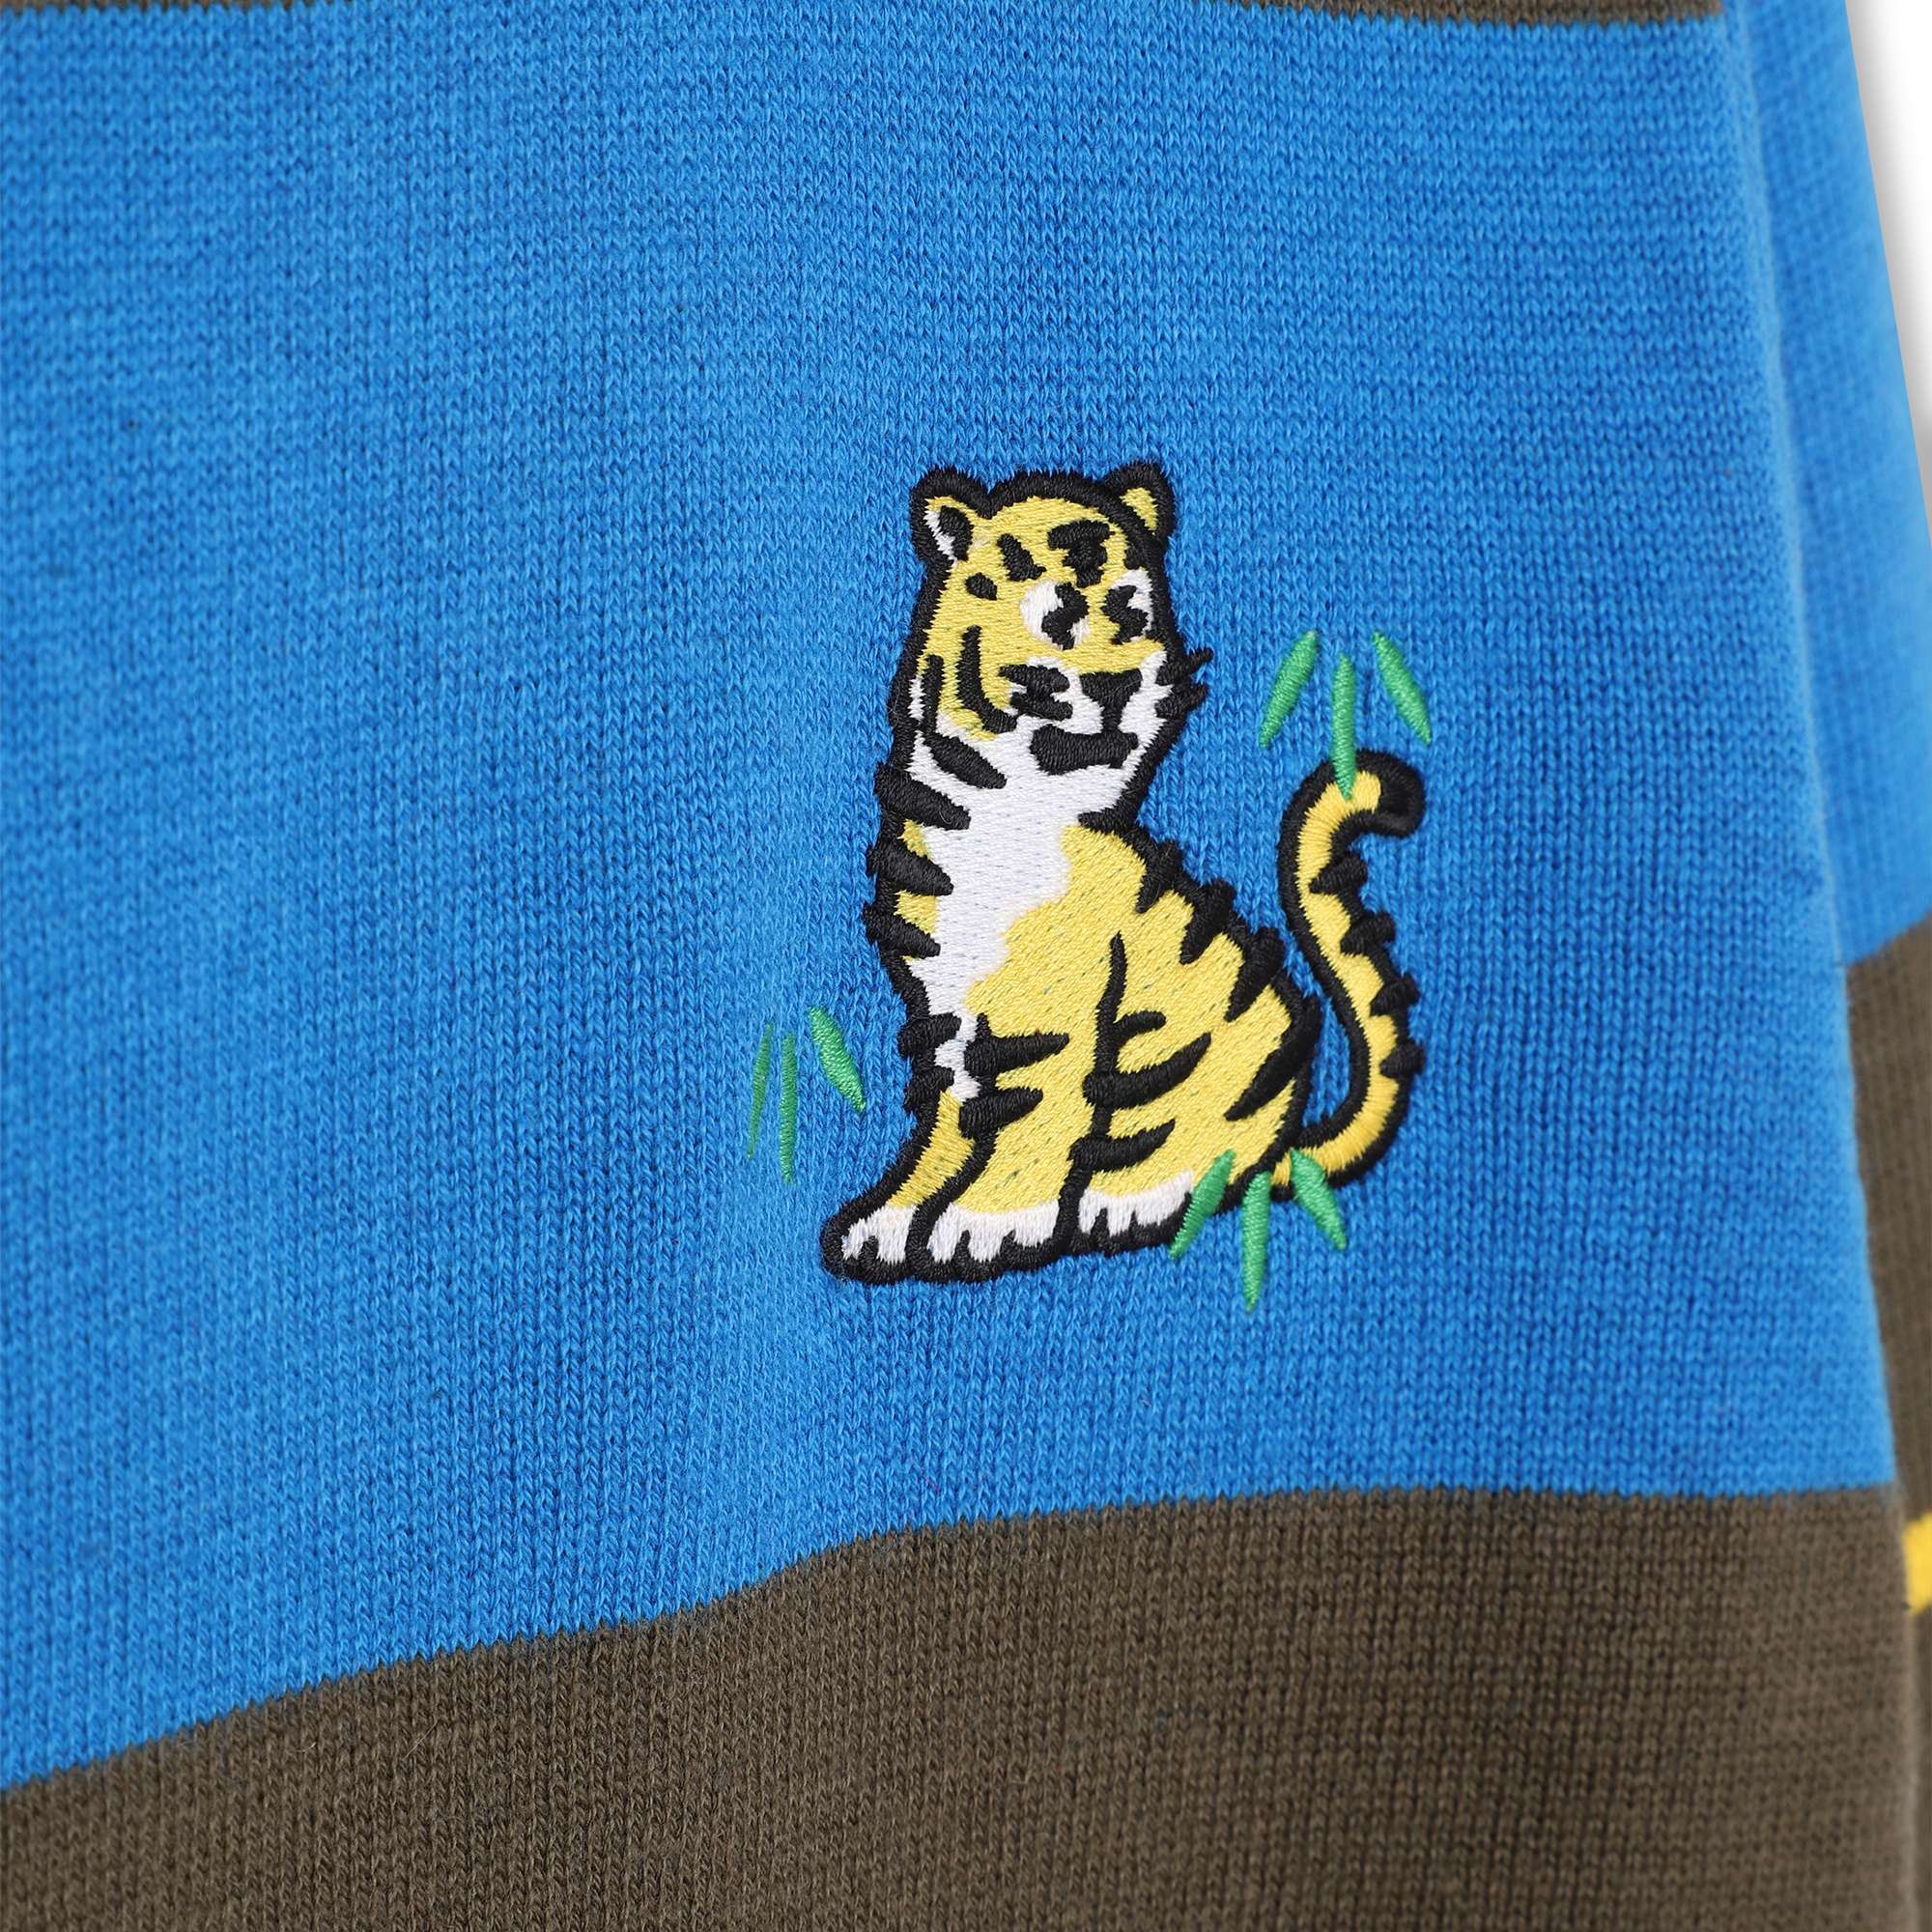 Tricolour-knit jumper KENZO KIDS for BOY